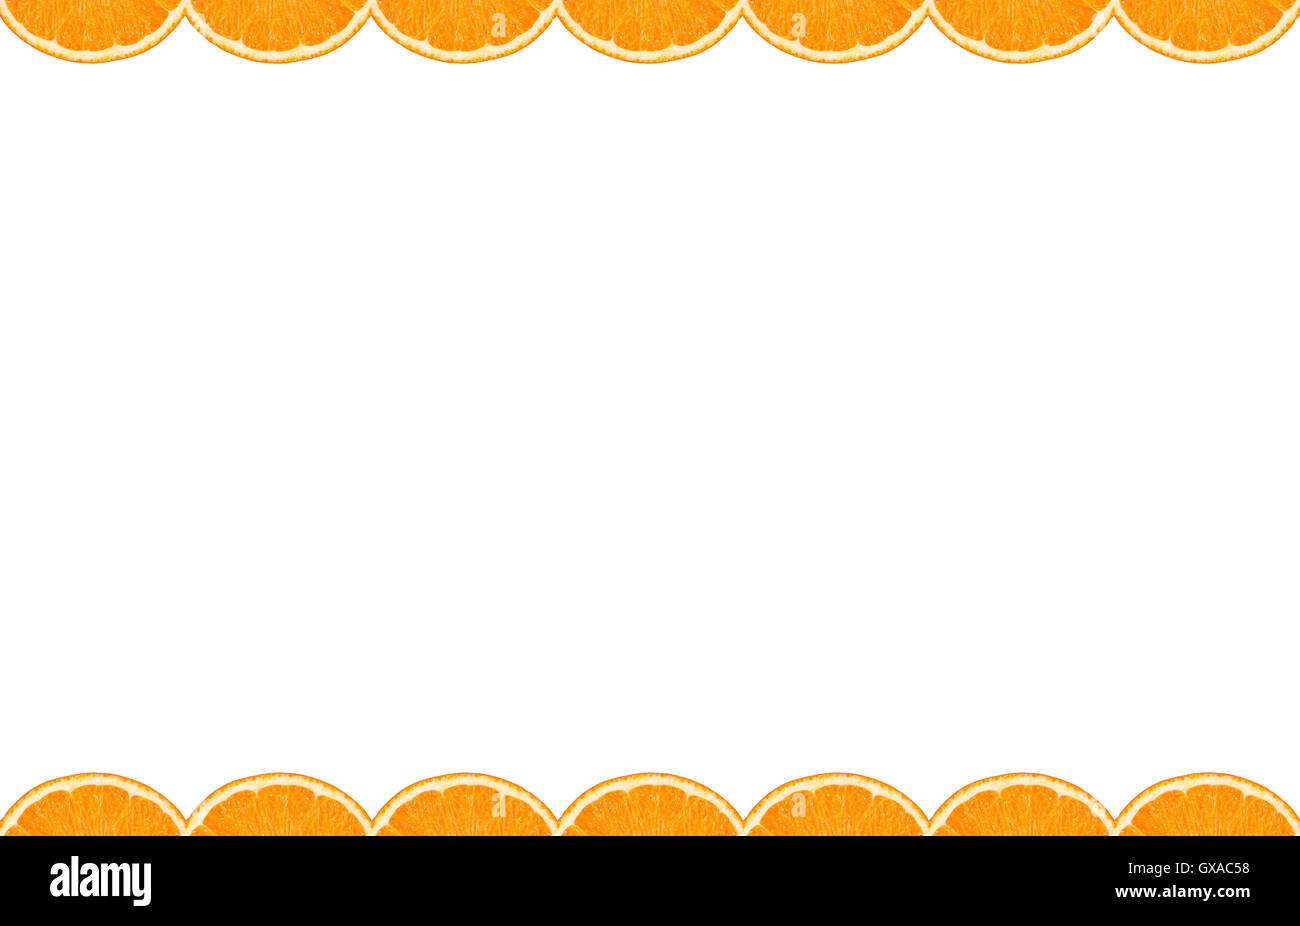 White background with slices of juicy tropical fruit orange Stock Photo